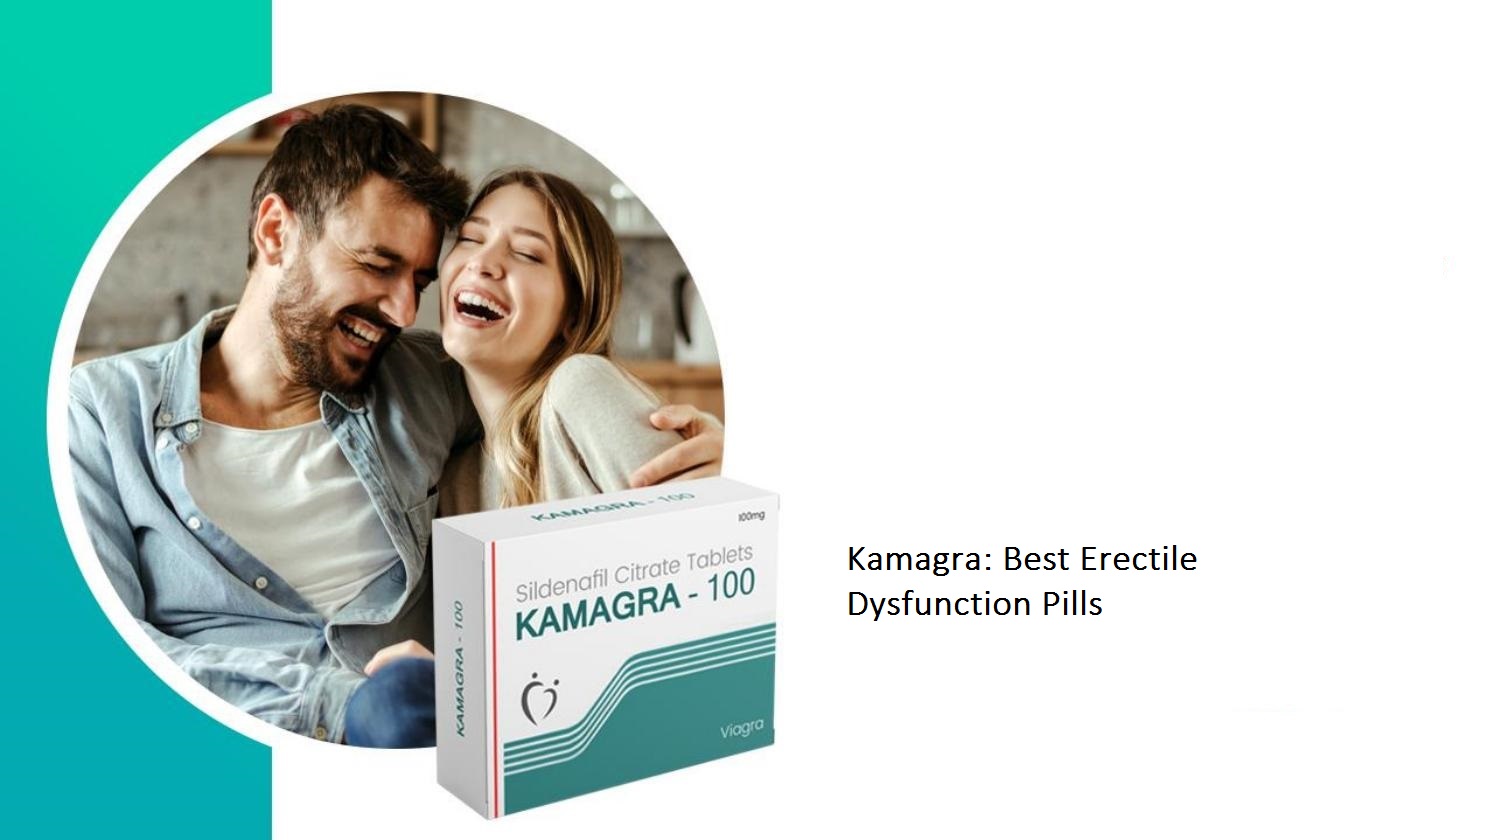 Kamagra: Best Erectile Dysfunction Pills